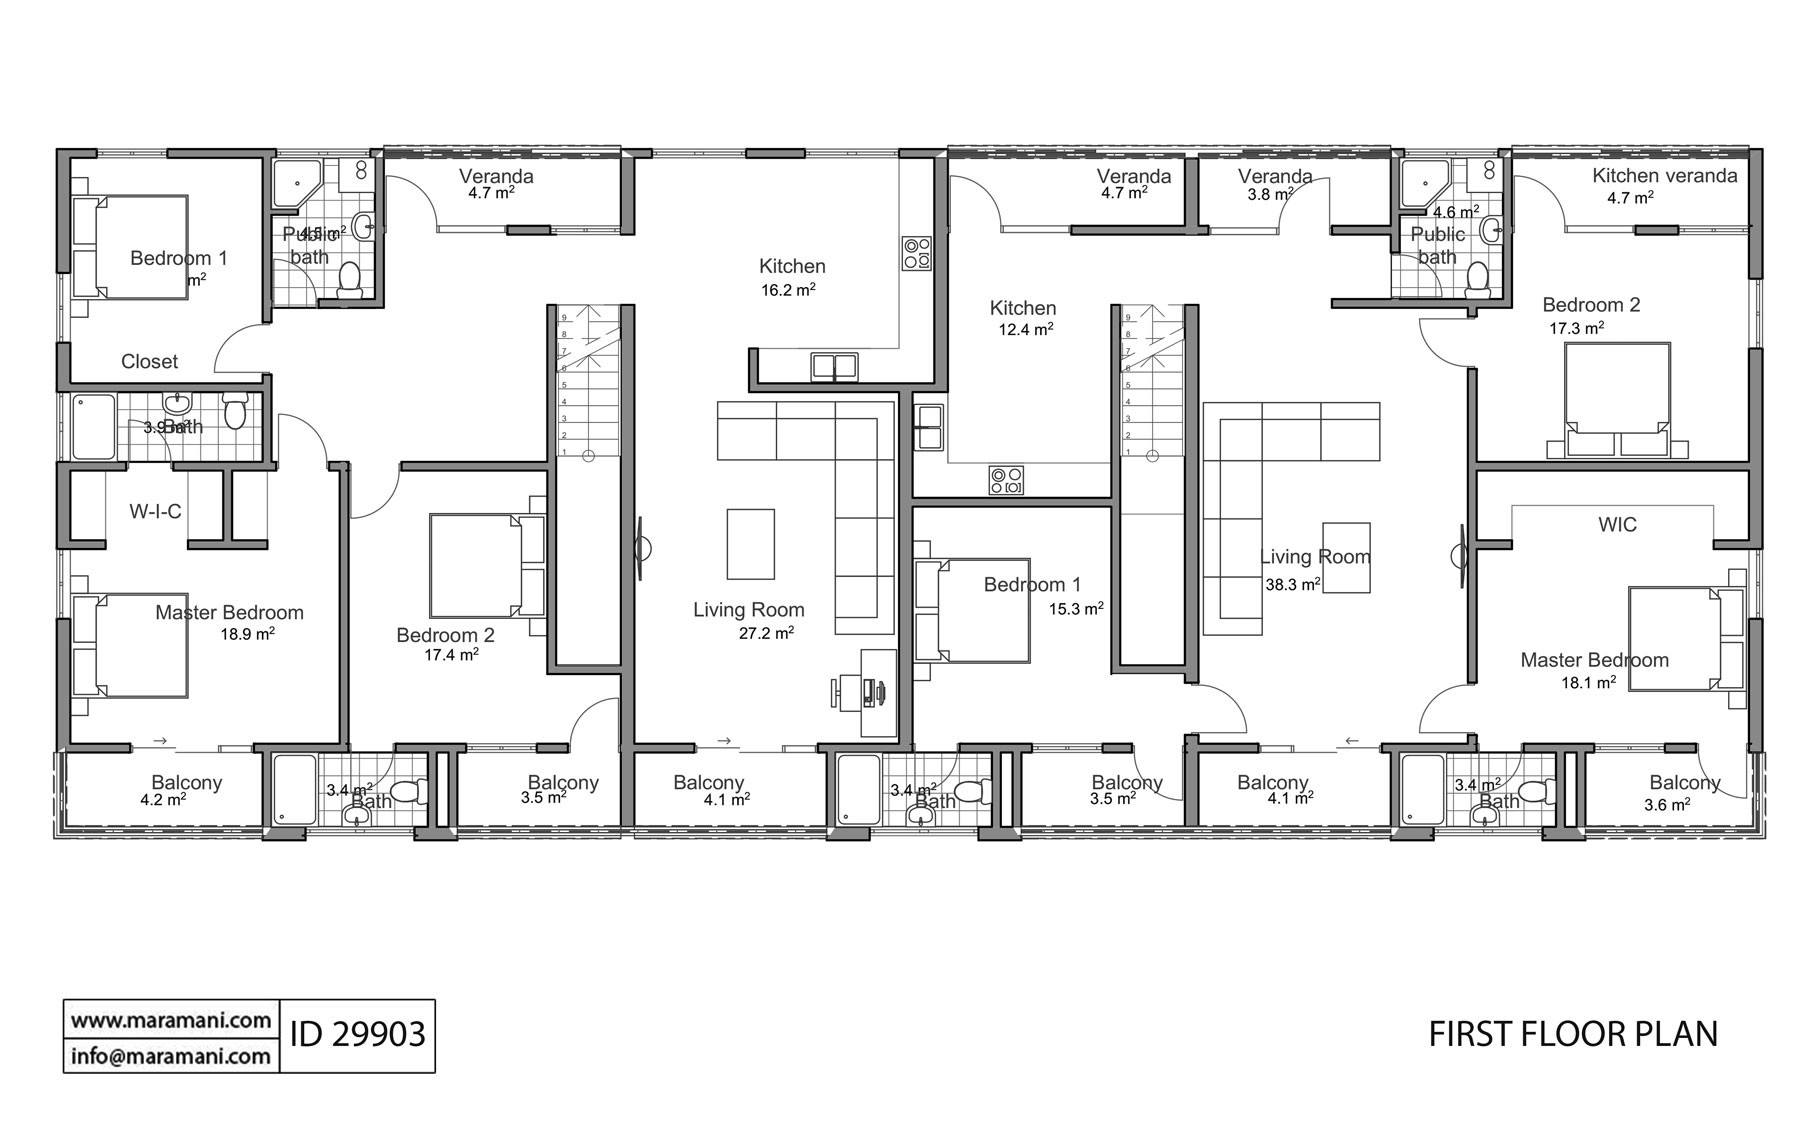 Apartment Building Floor Plan - ID 29903